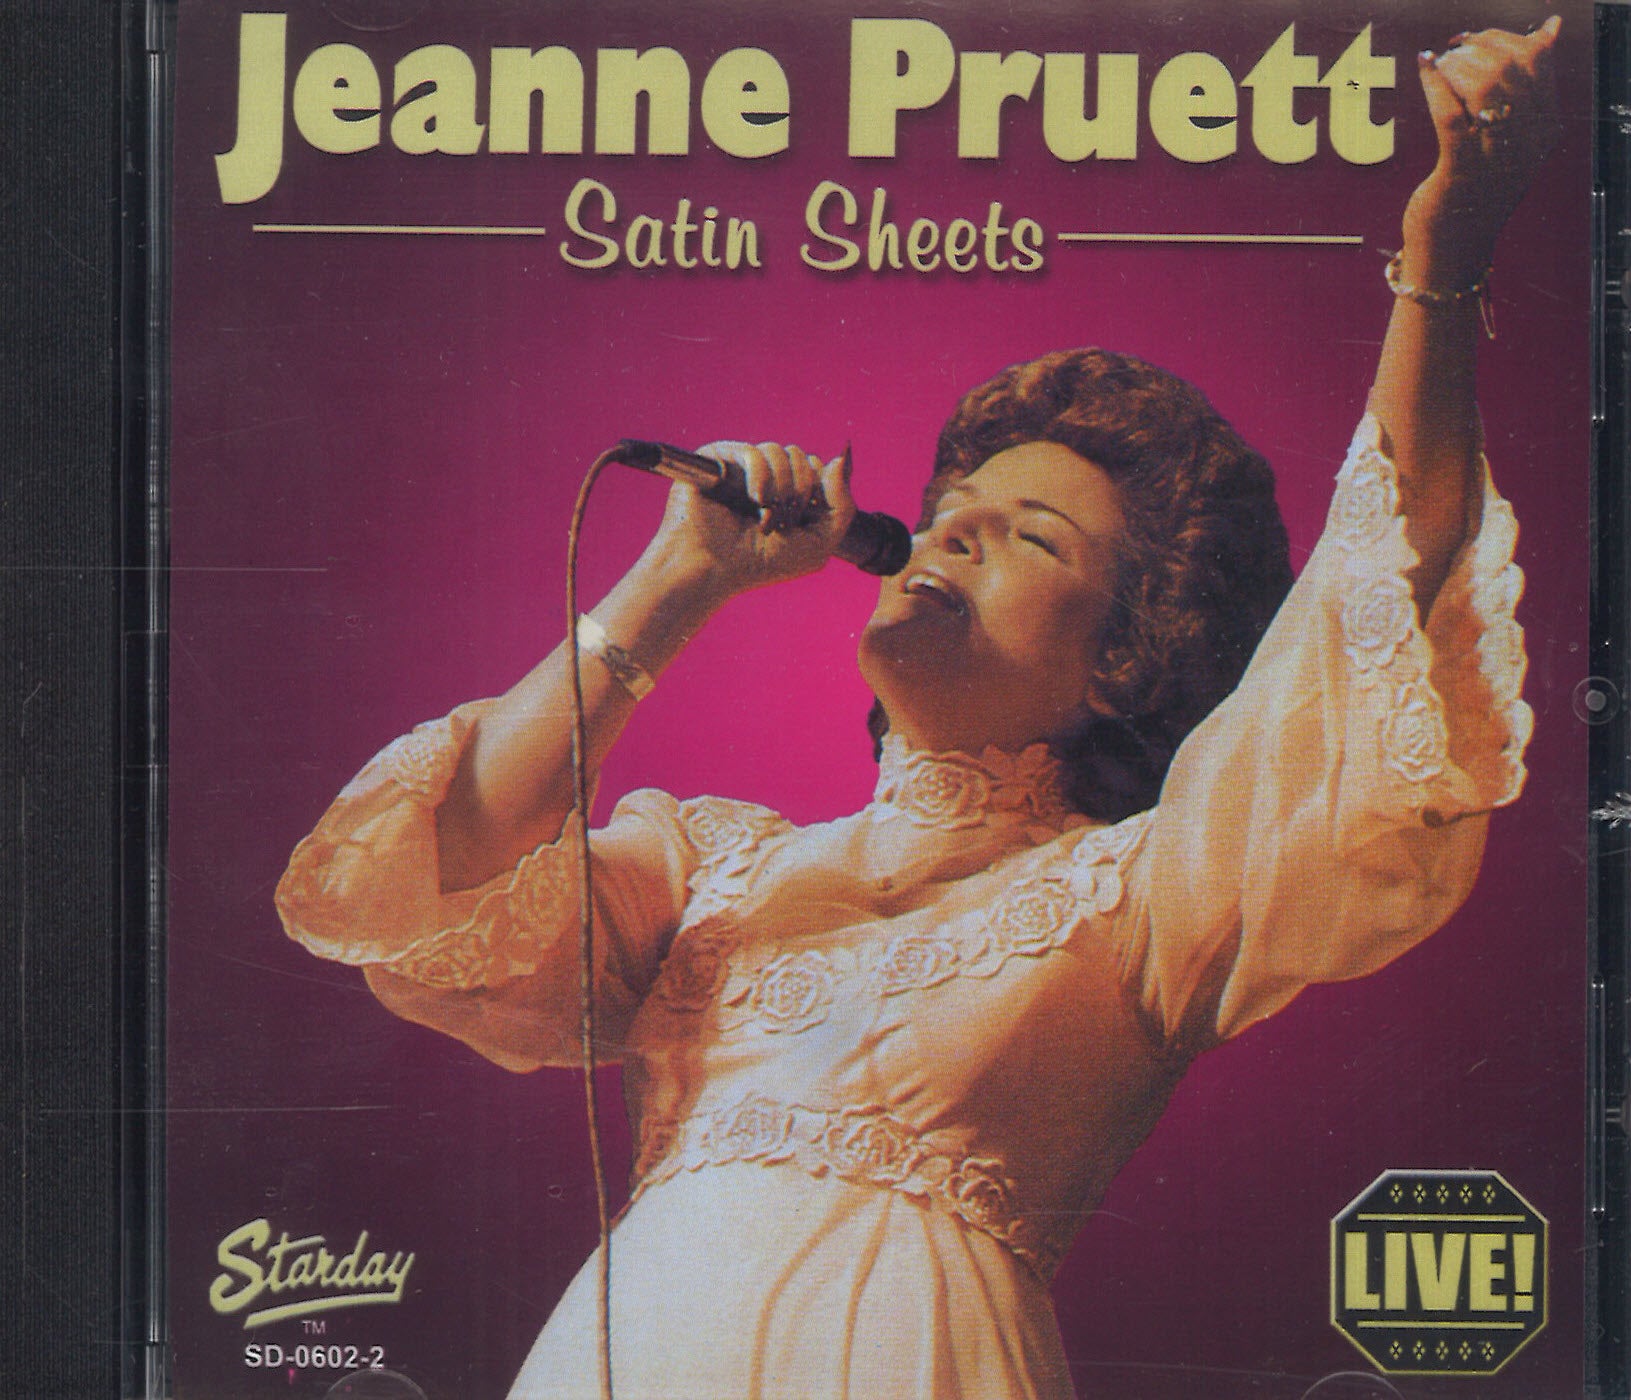 Jeanne Pruett Satin Sheets Live!